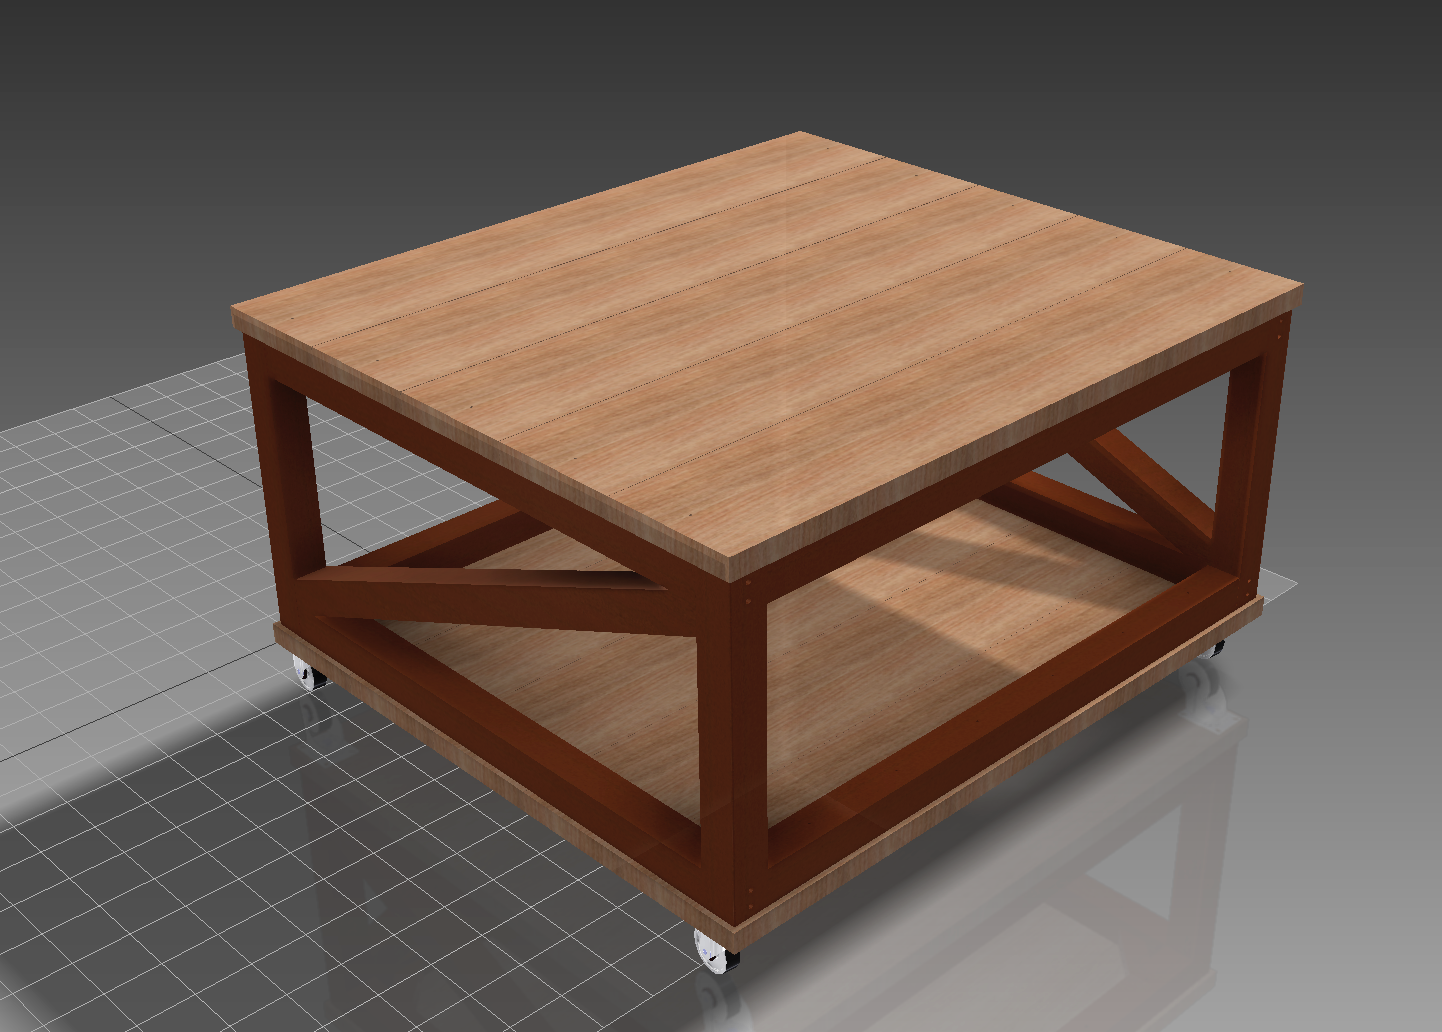 CNC-Tisch als CAD-Modell